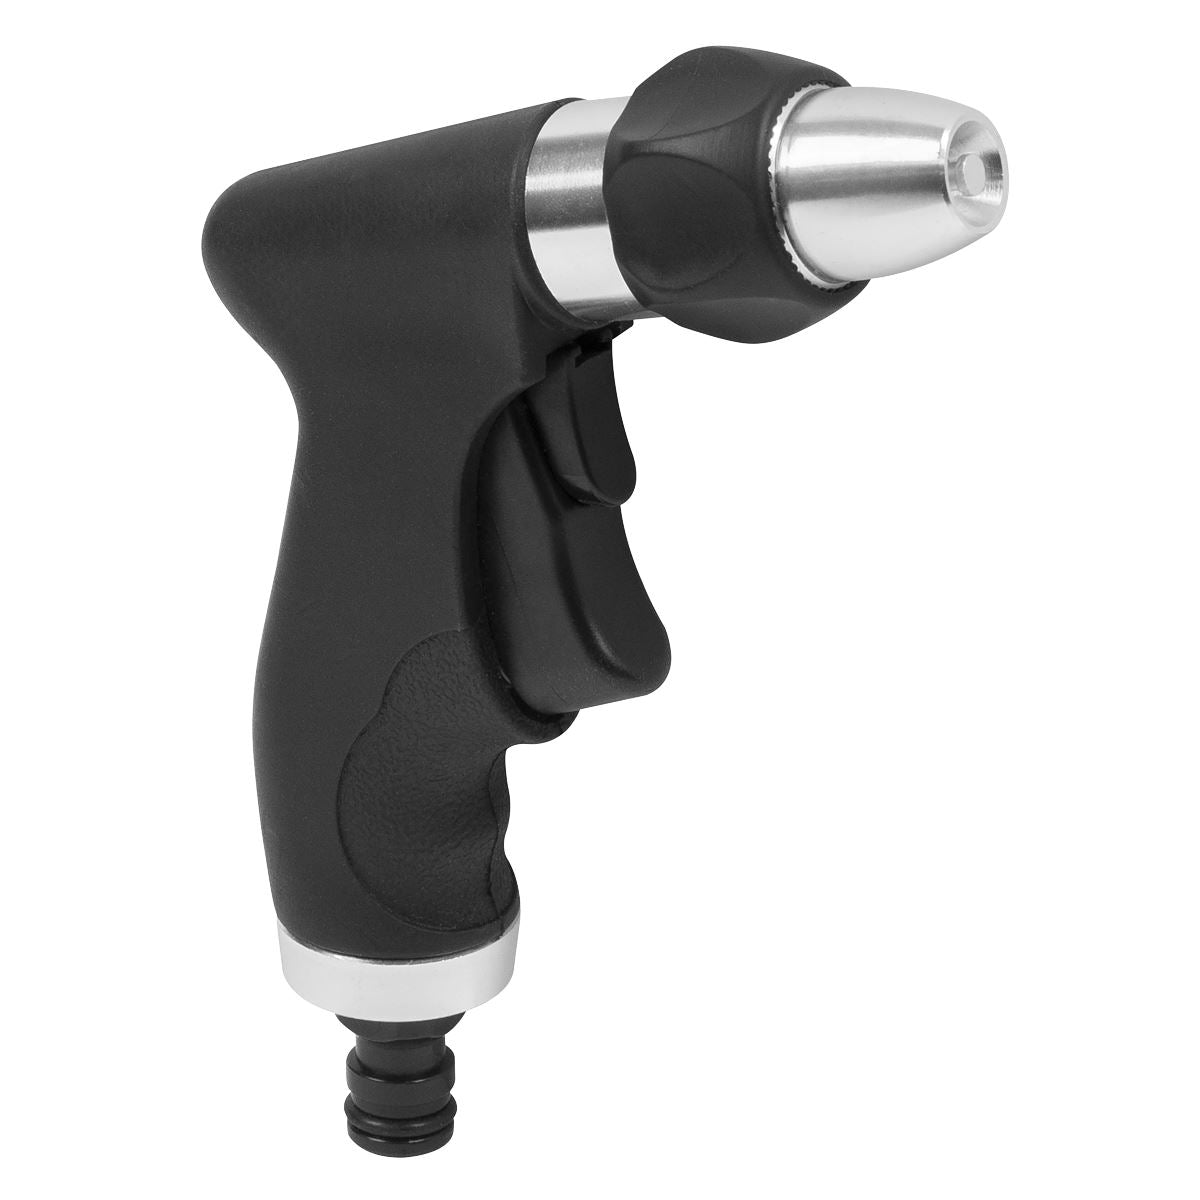 Sealey Adjustable Spray Gun With Soft Grip Handle